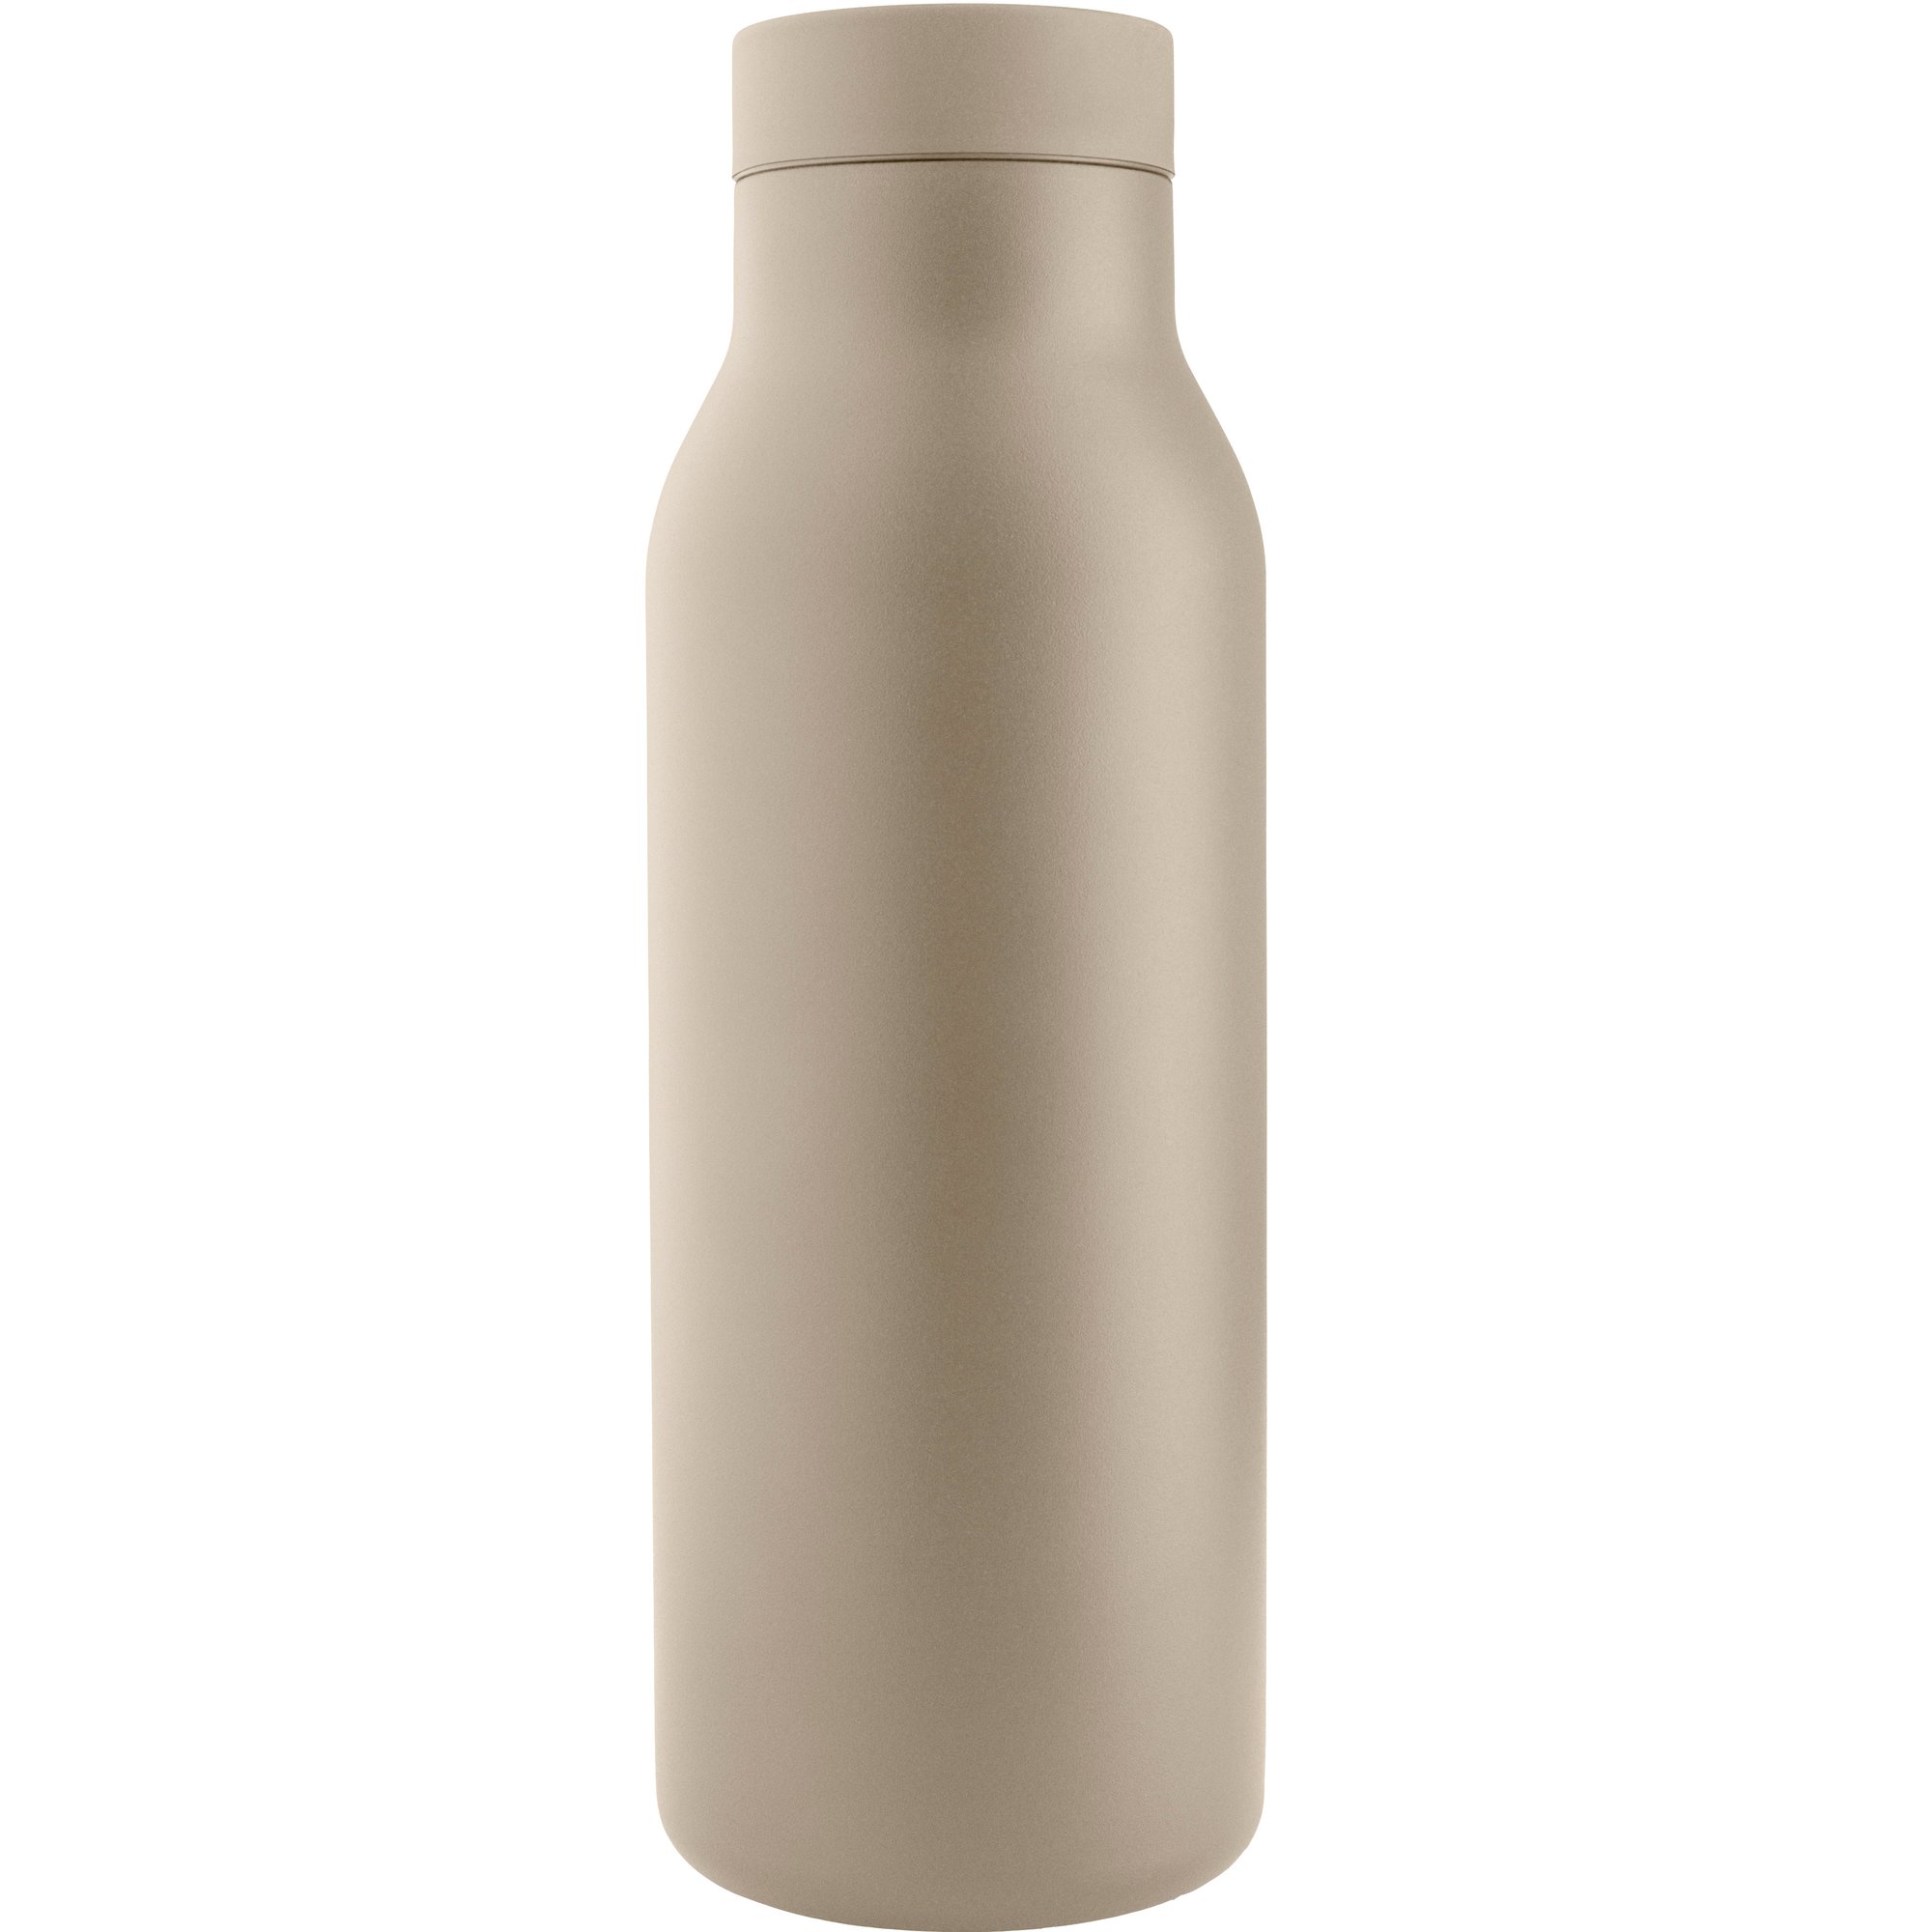 Eva Solo Urban termosflaske 0,5 liter, pearl beige Termoflaske